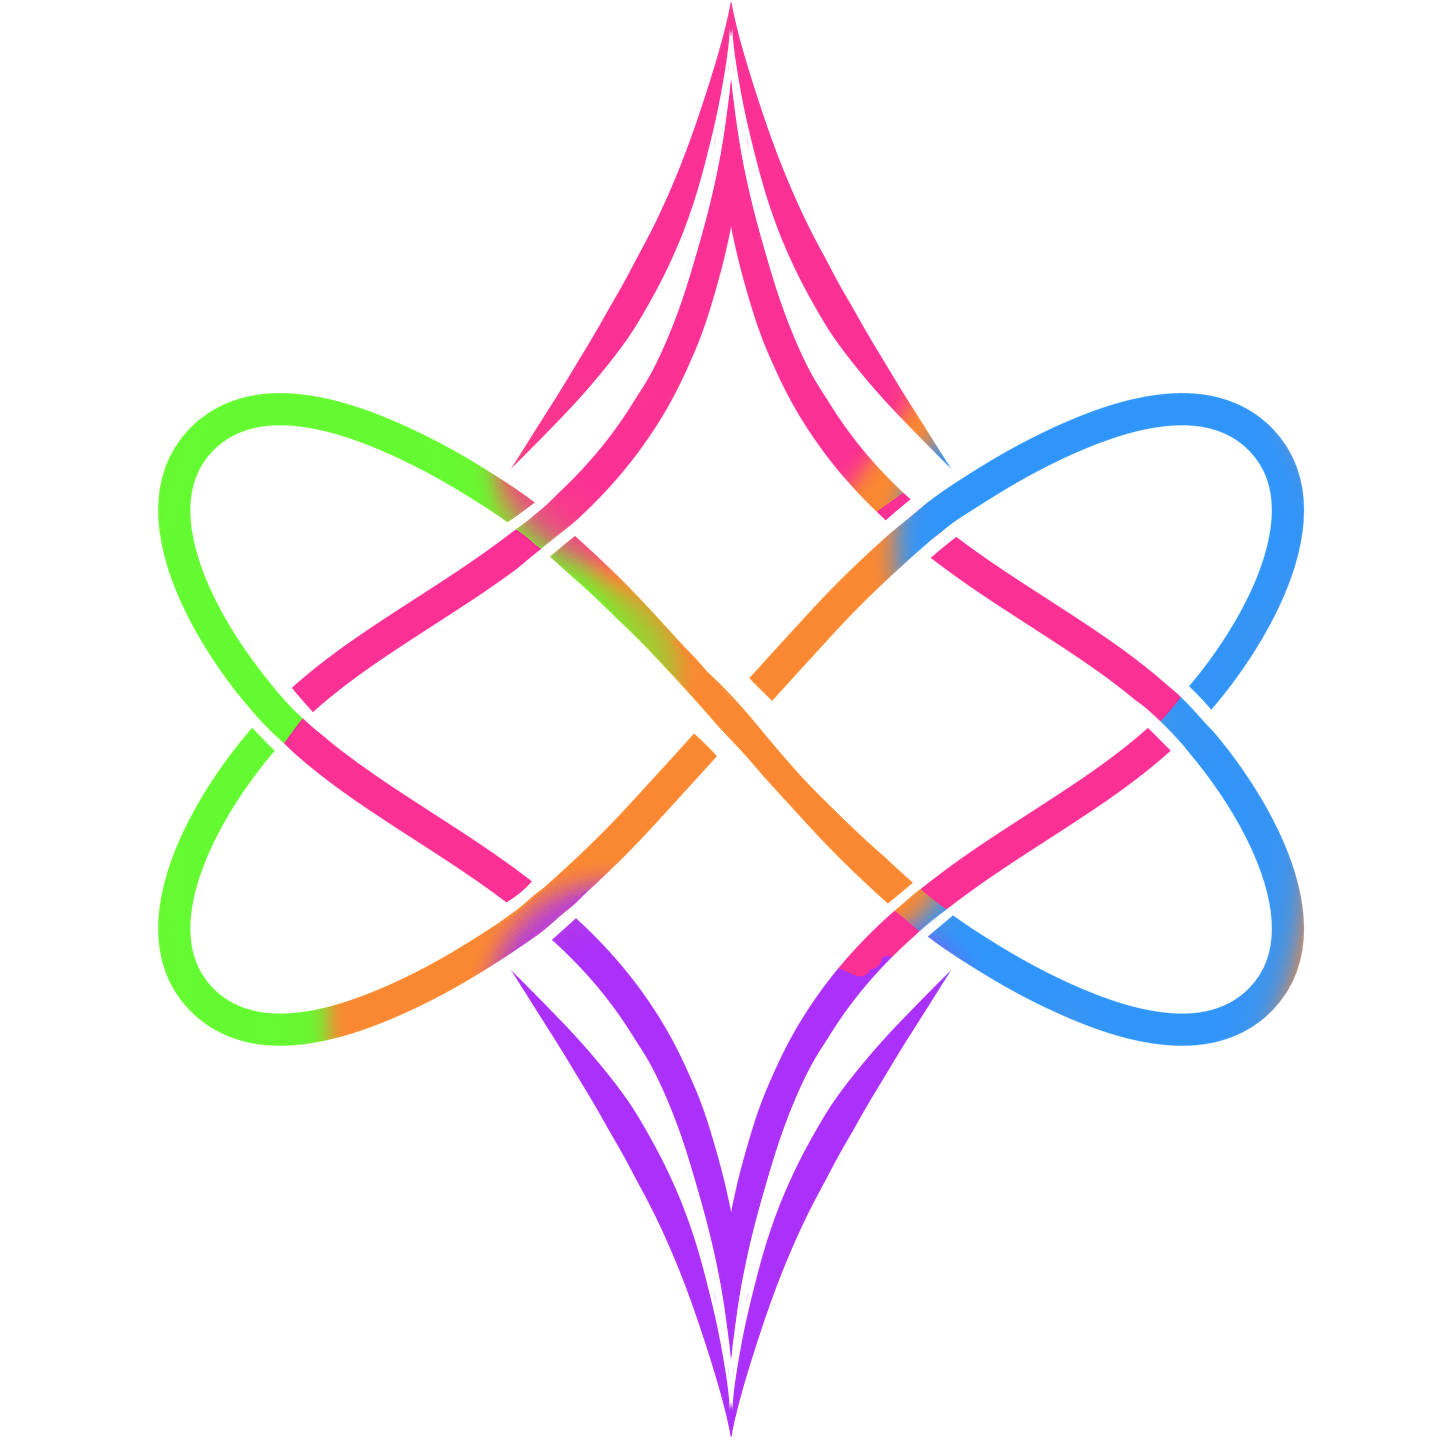 Digital artwork of a heart-infinity-star symbol